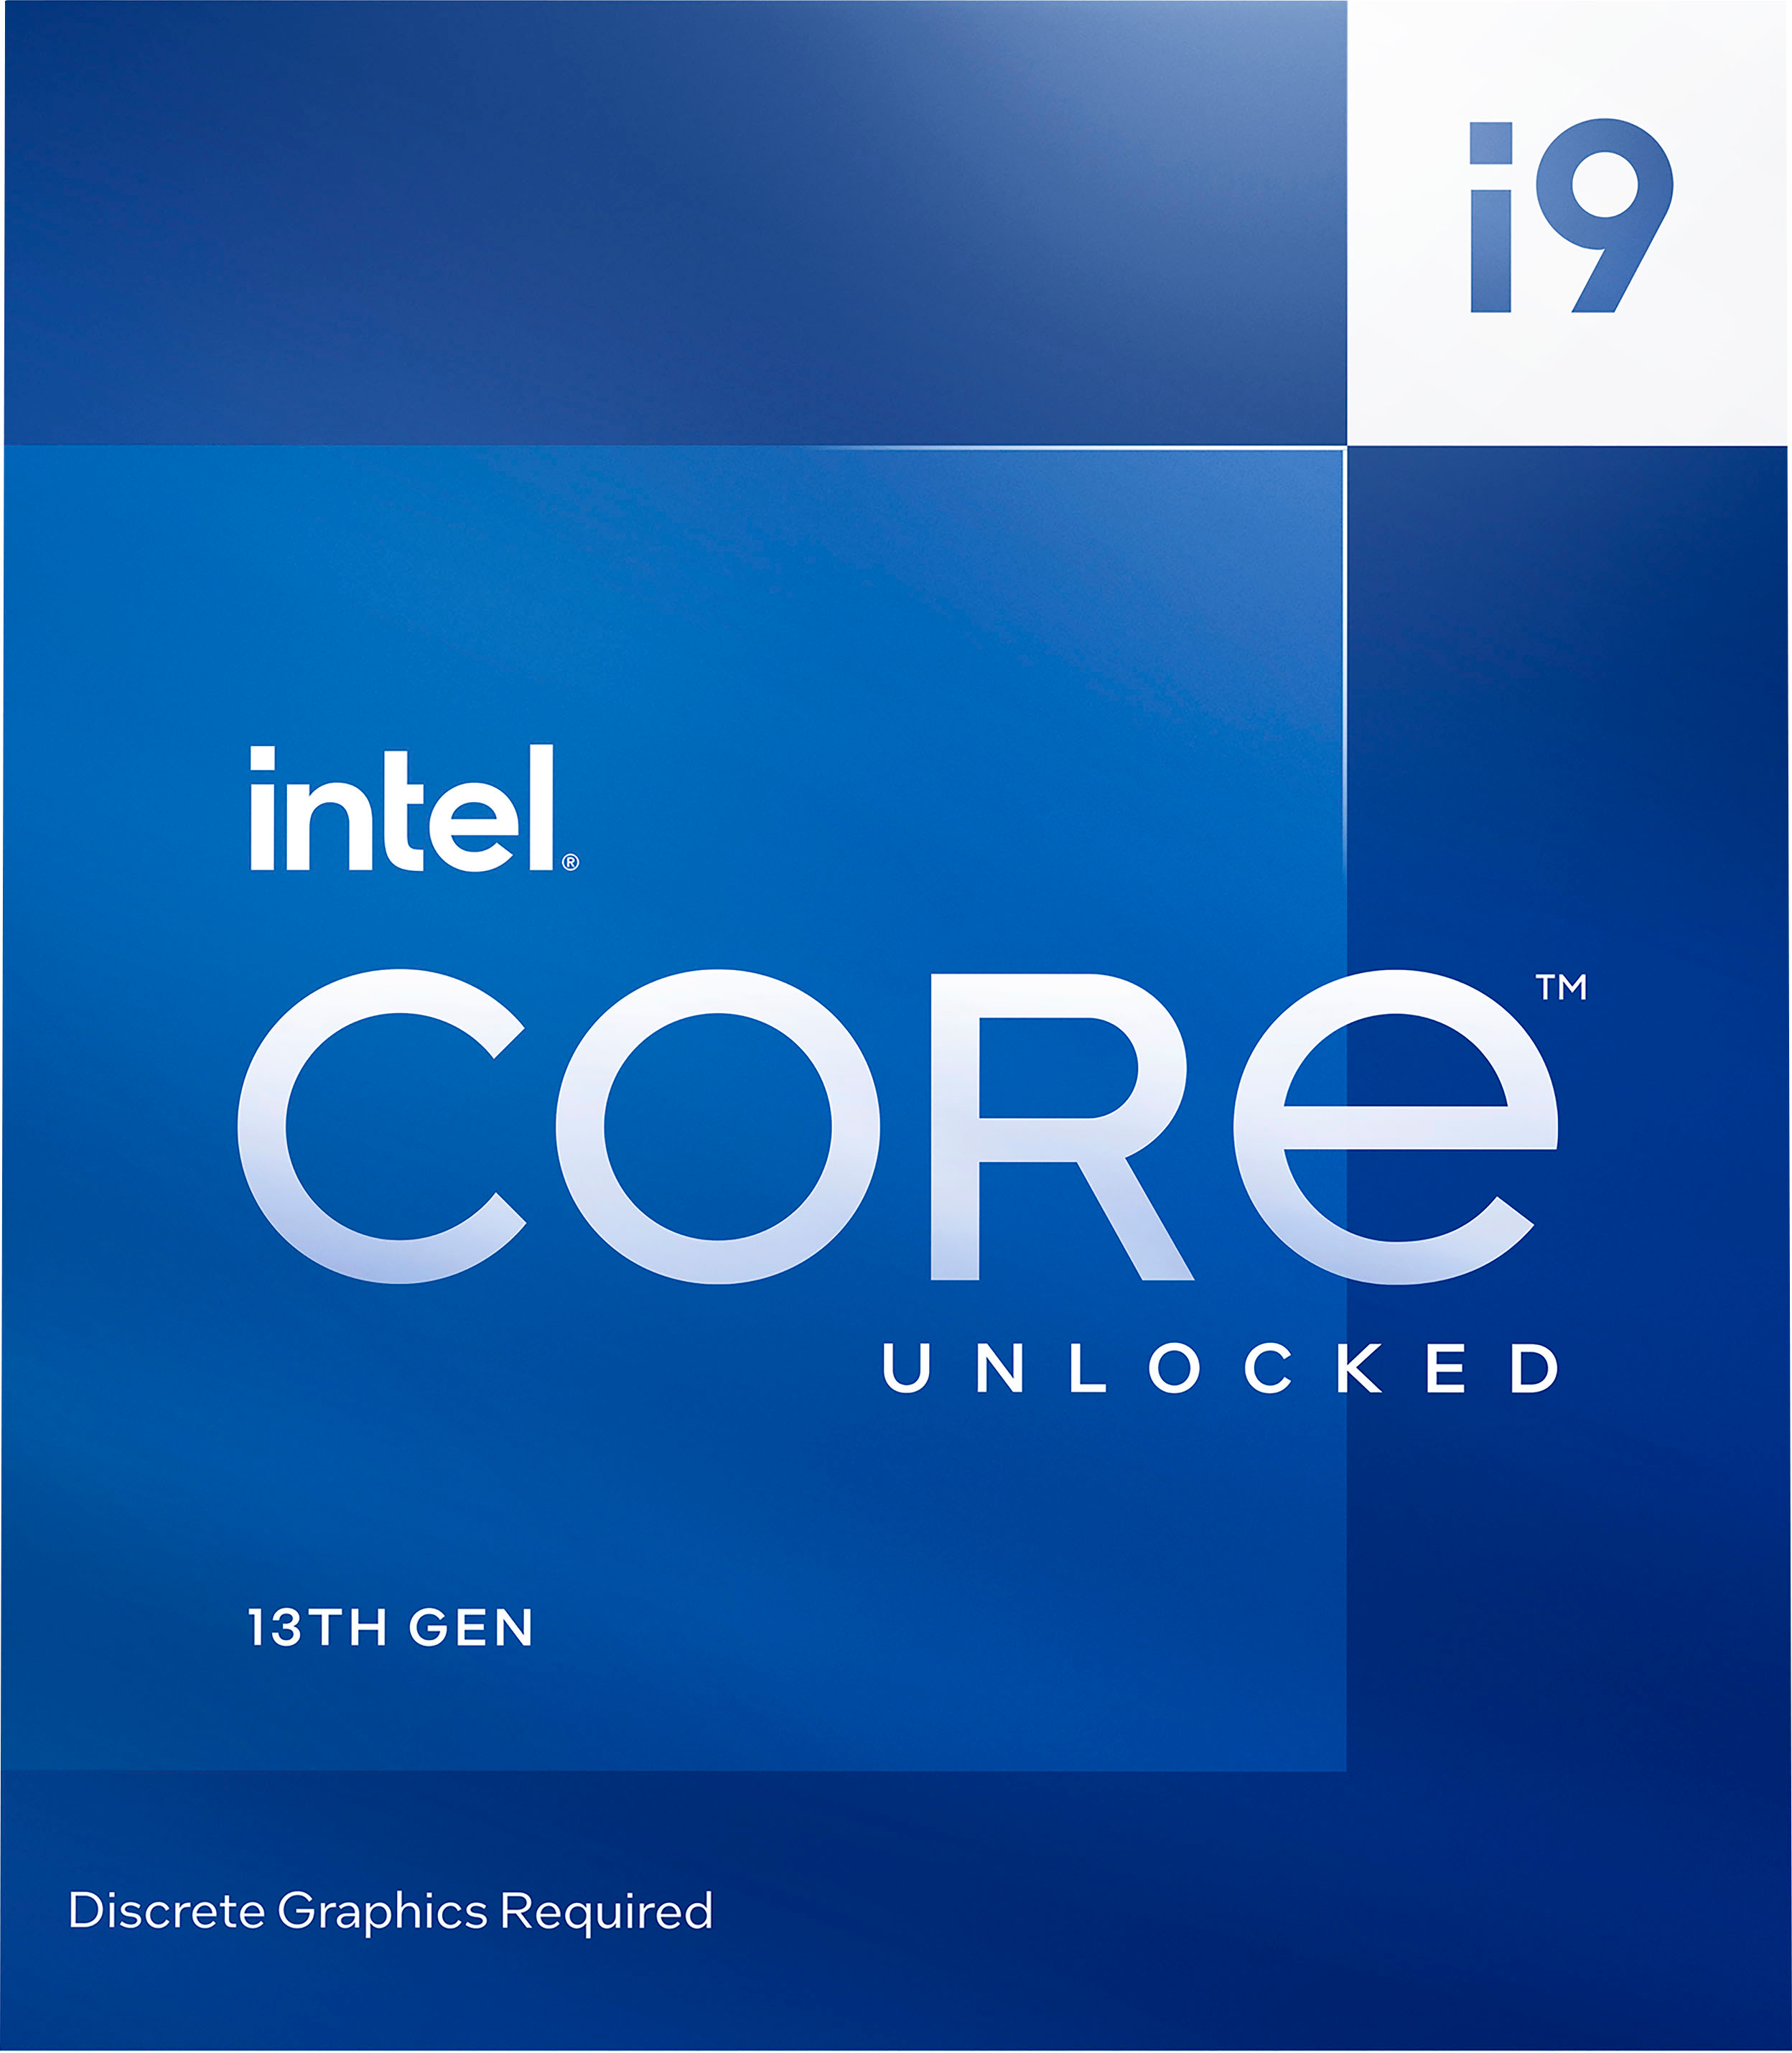 Intel Core i9-10900 Review - Fail at Stock, Impressive when Unlocked